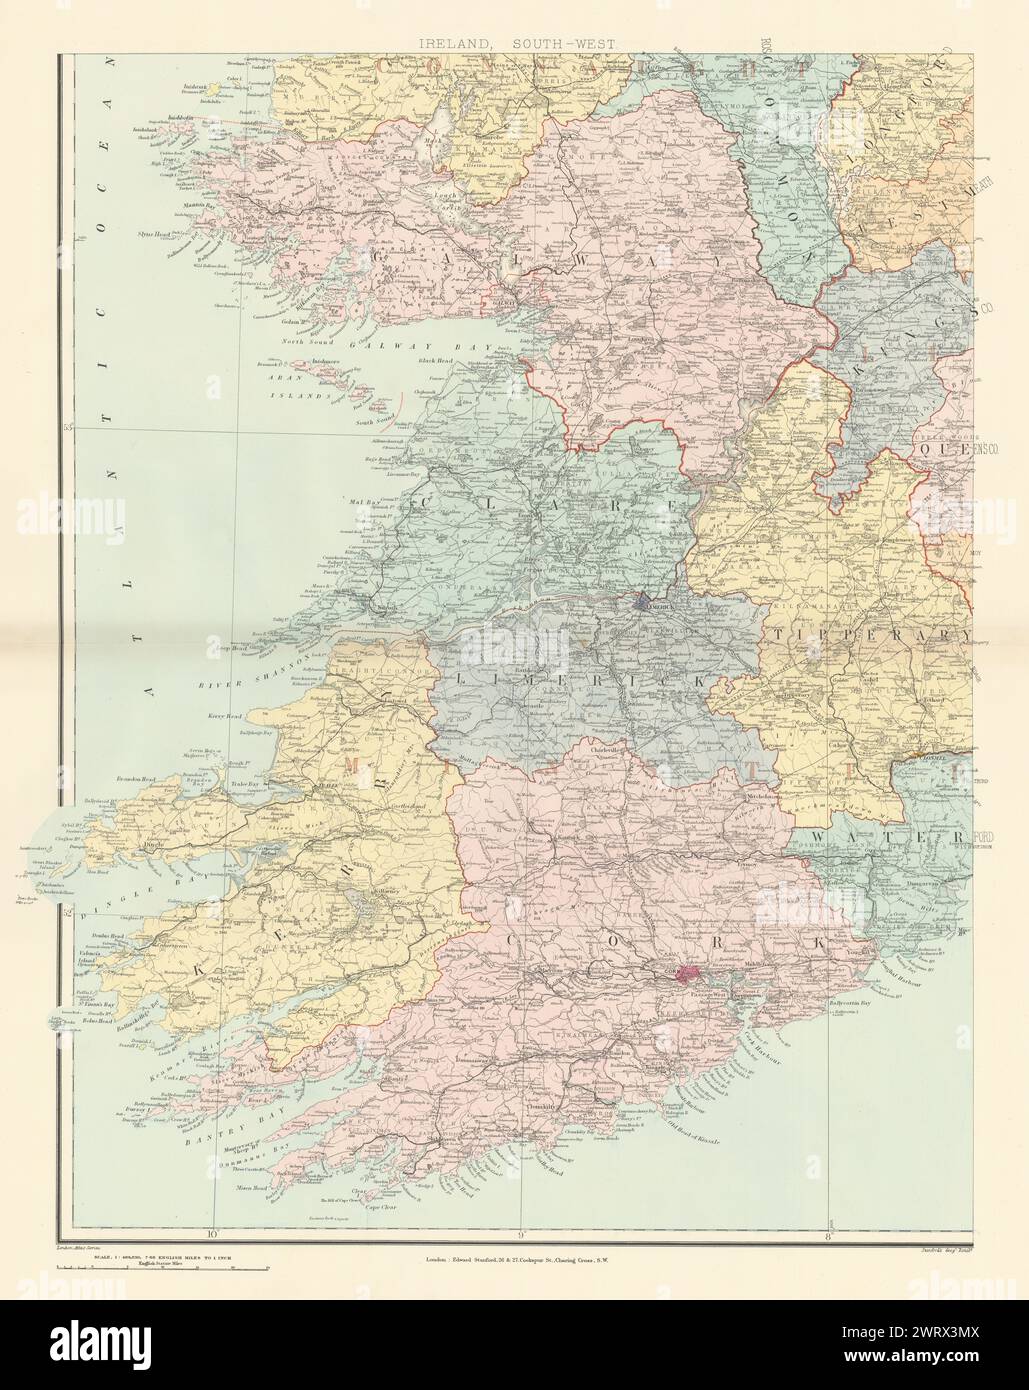 Irlanda del sur-oeste de Munster Kerry Cork LIMERICK Limerick Clare. Mapa de 1896 de Stanford Foto de stock